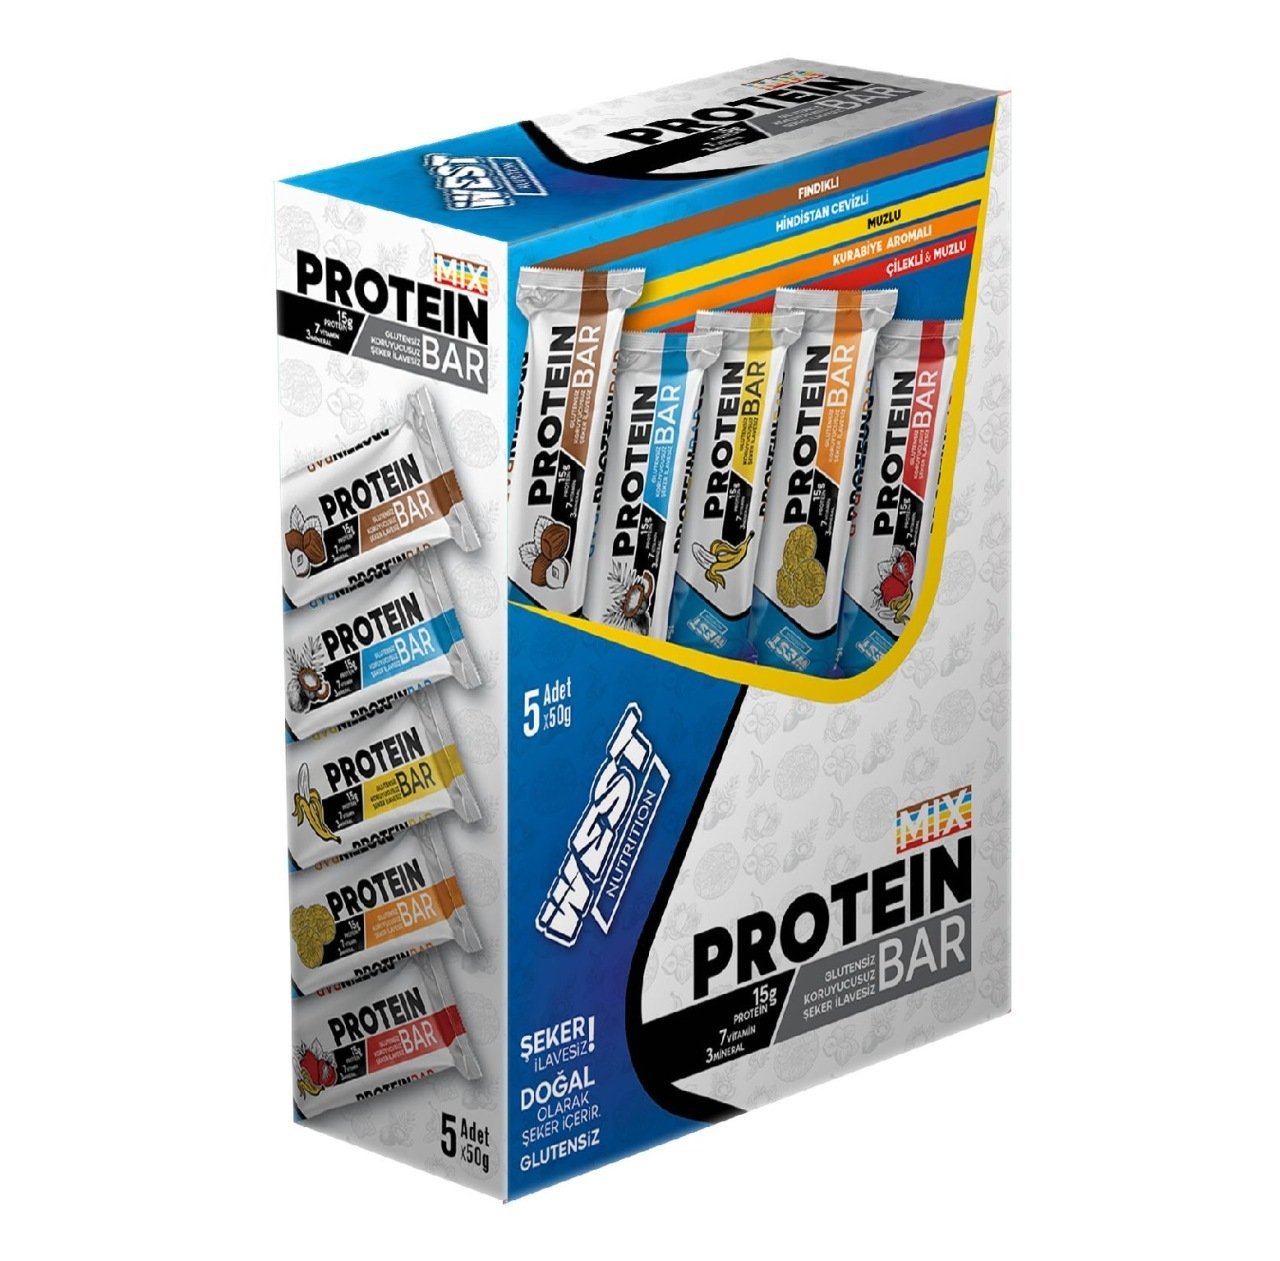 Karışık 5li Protein Bar 5 adet x 50 gram